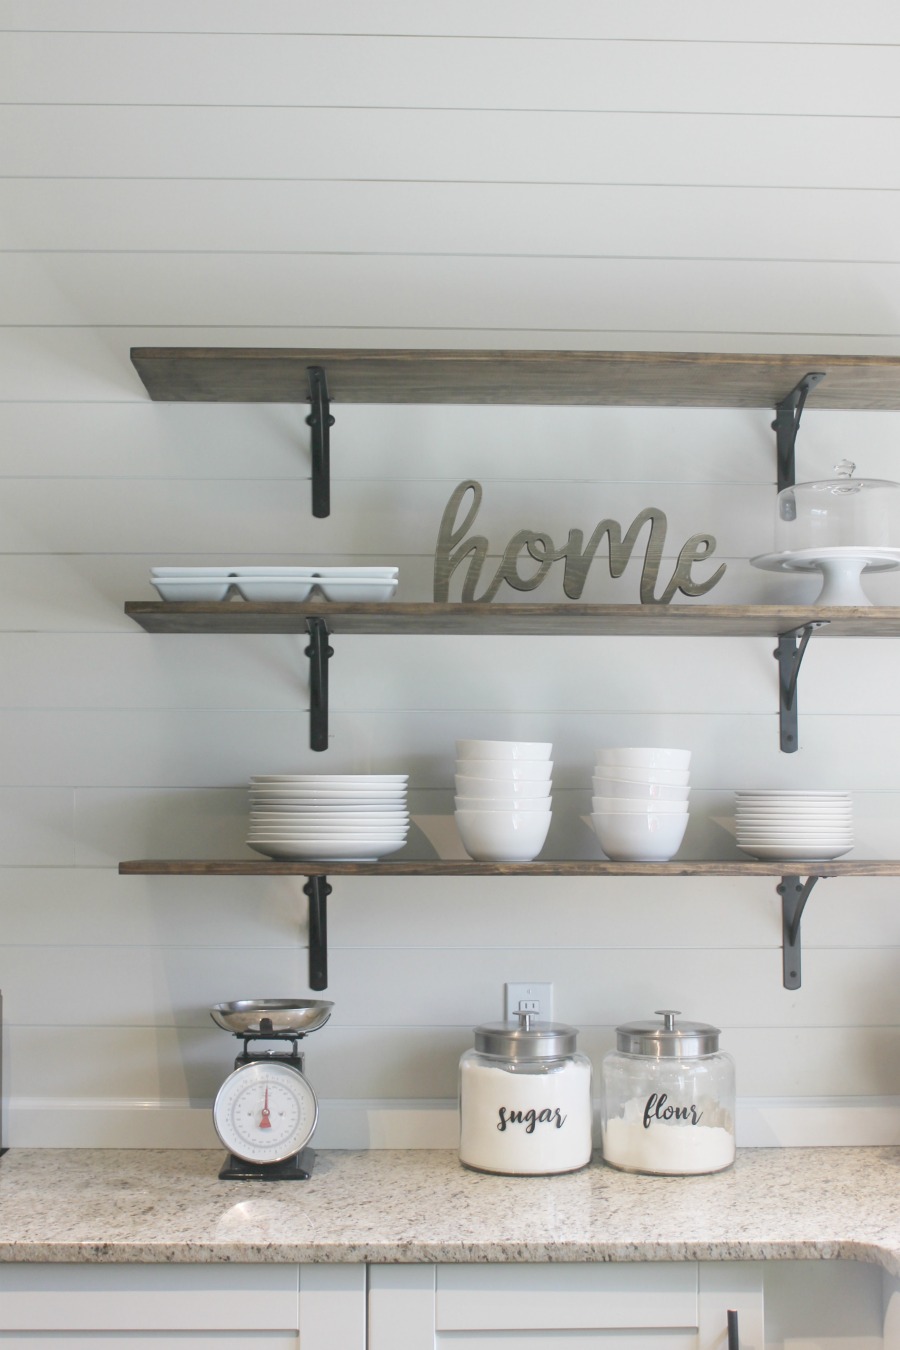 DIY kitchen shelves - farmhouse style, white ceramic bowls and plates